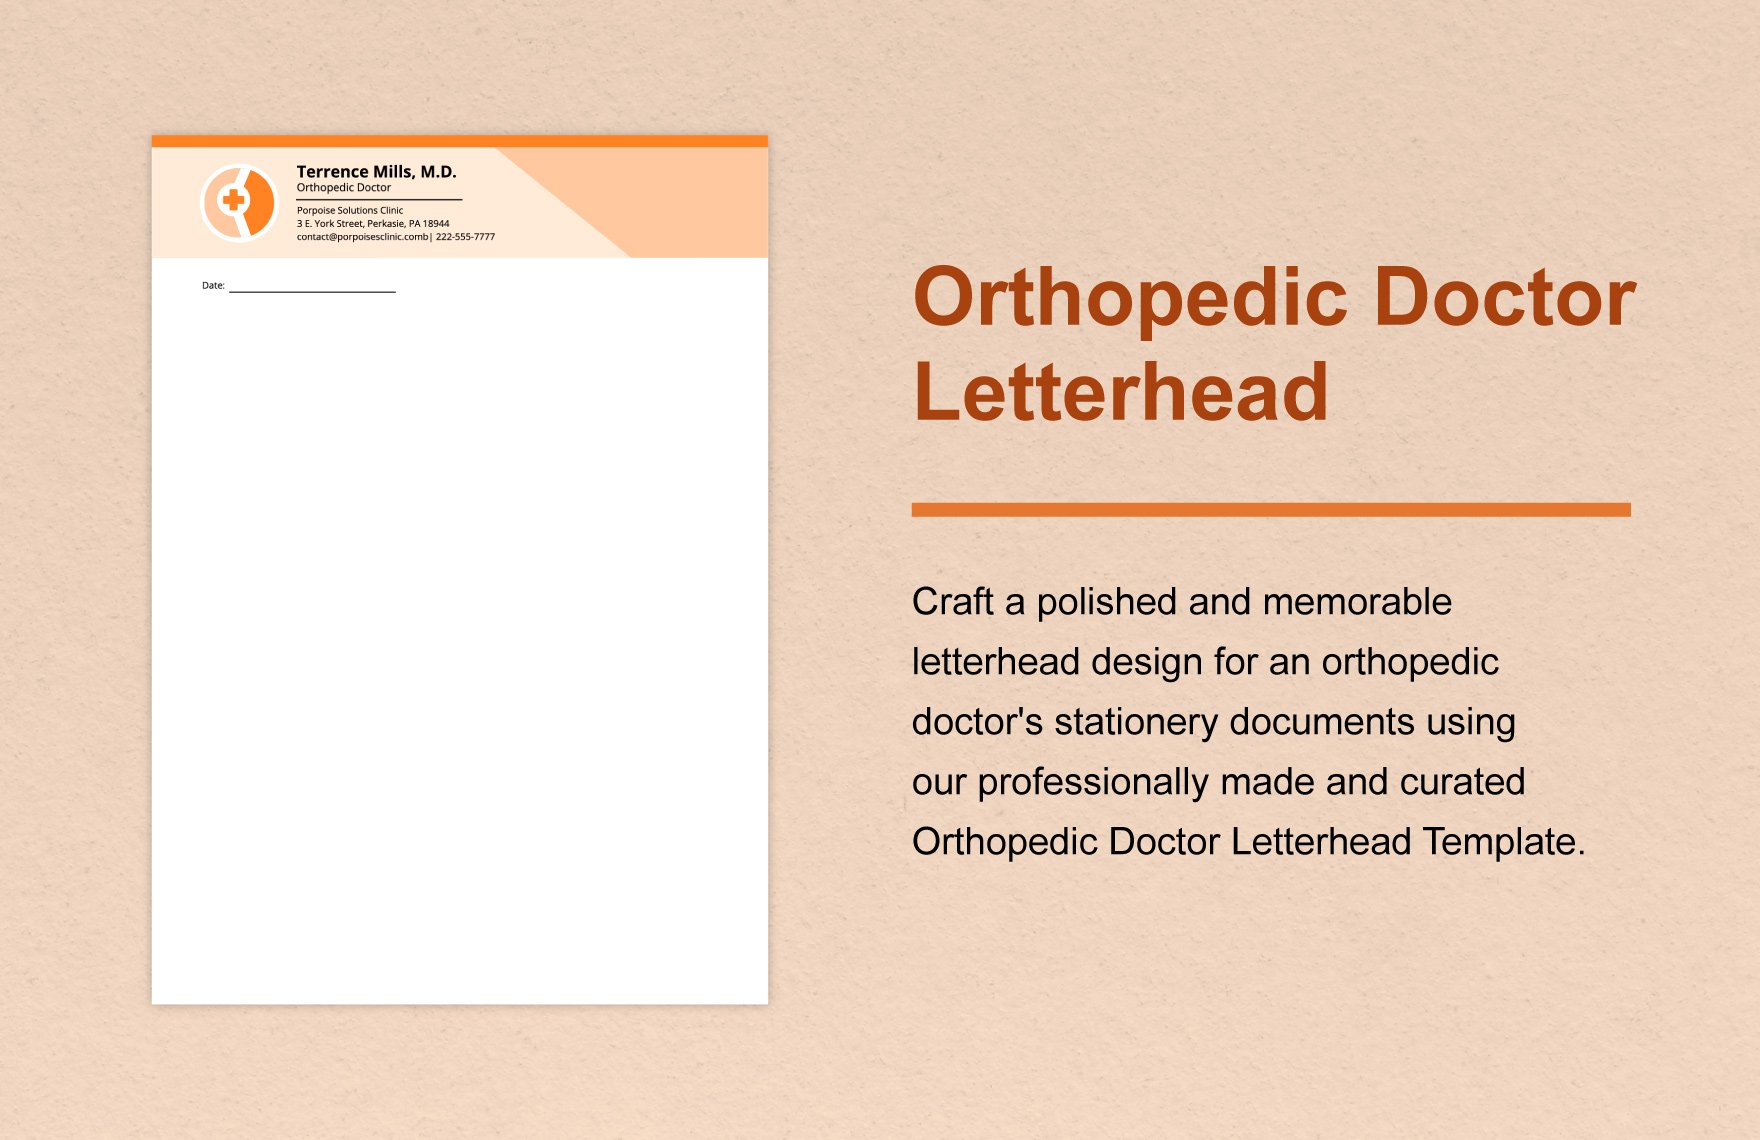 Orthopedic Doctor Letterhead